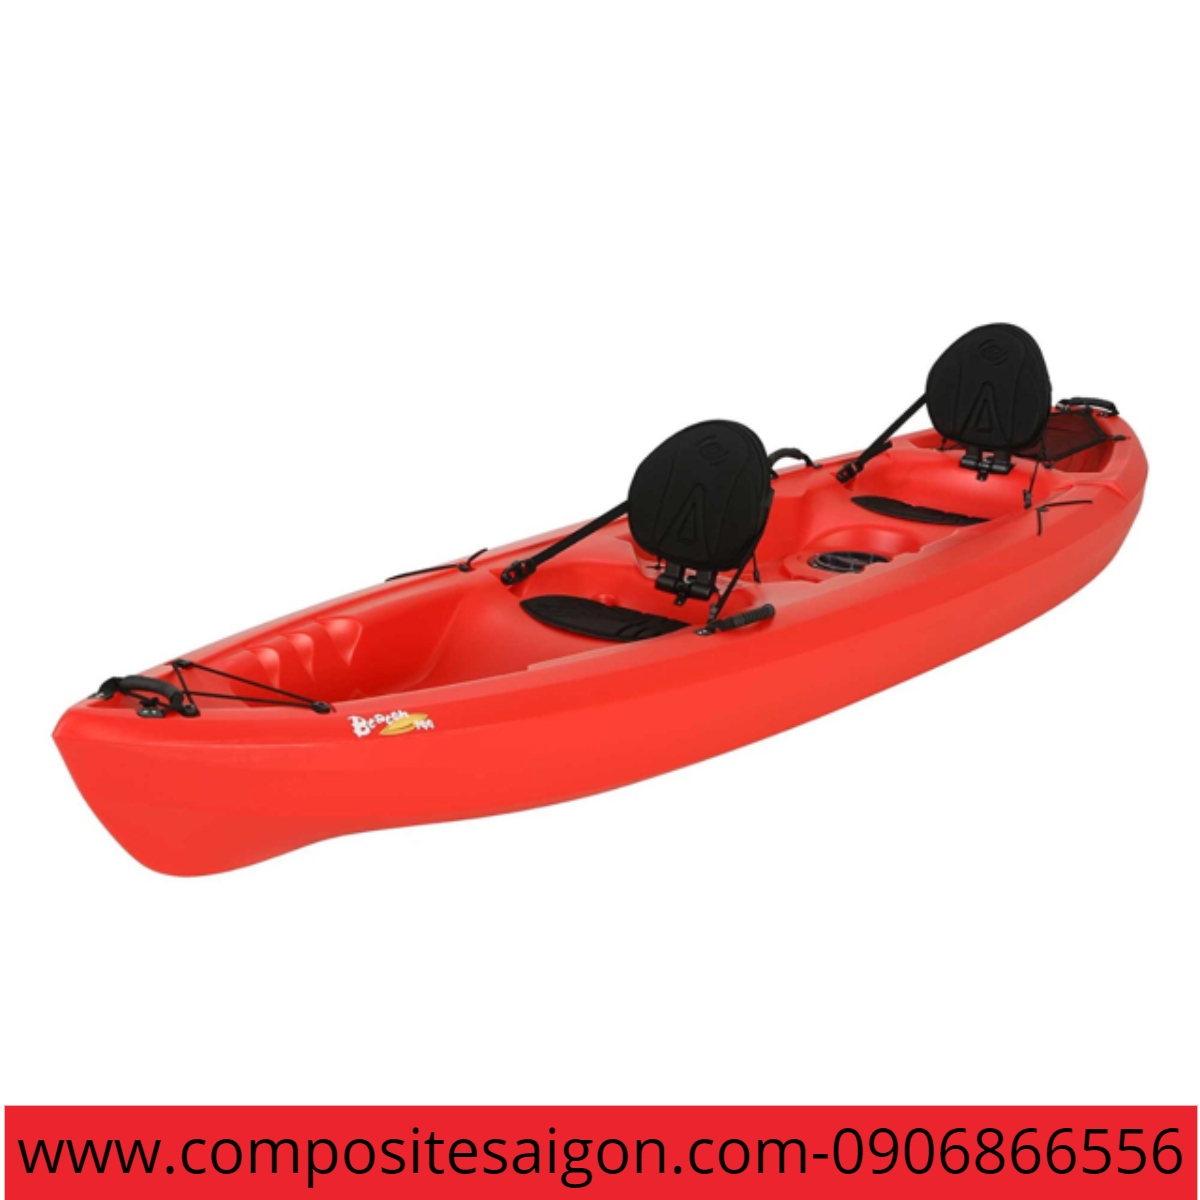 thuyền kayak đôi, thuyền kayak đôi sit-in, thuyền kayak giá rẻ, thuyền kayak đôi nhẹ, thuyền kayak đôi đẹp, thuyền kayak composite